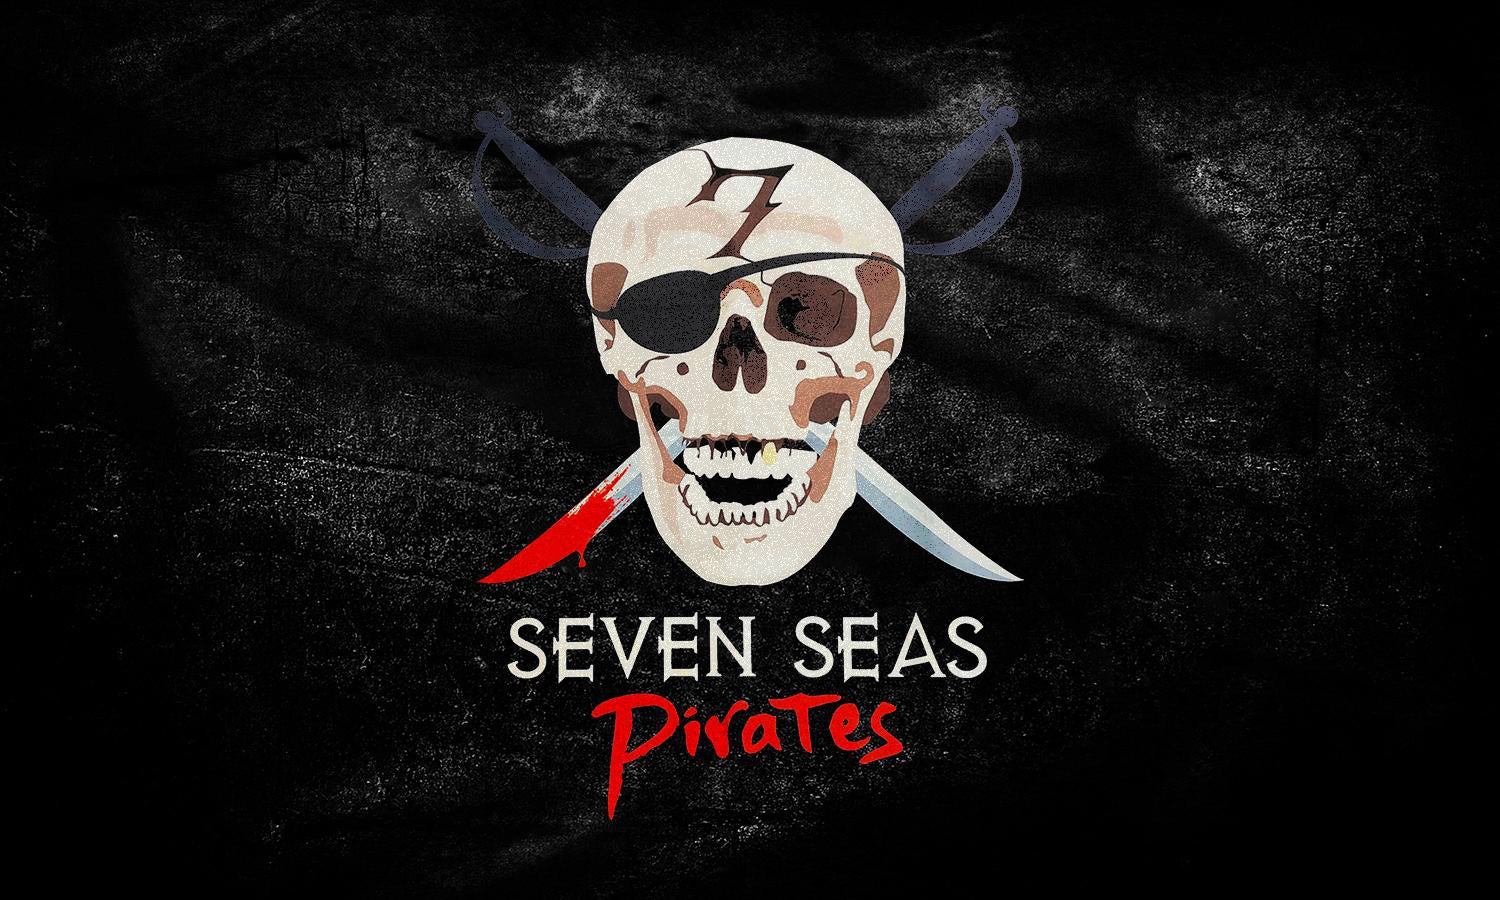 Seven Seas Pirate Flag - Skull and Crossbones Black Background